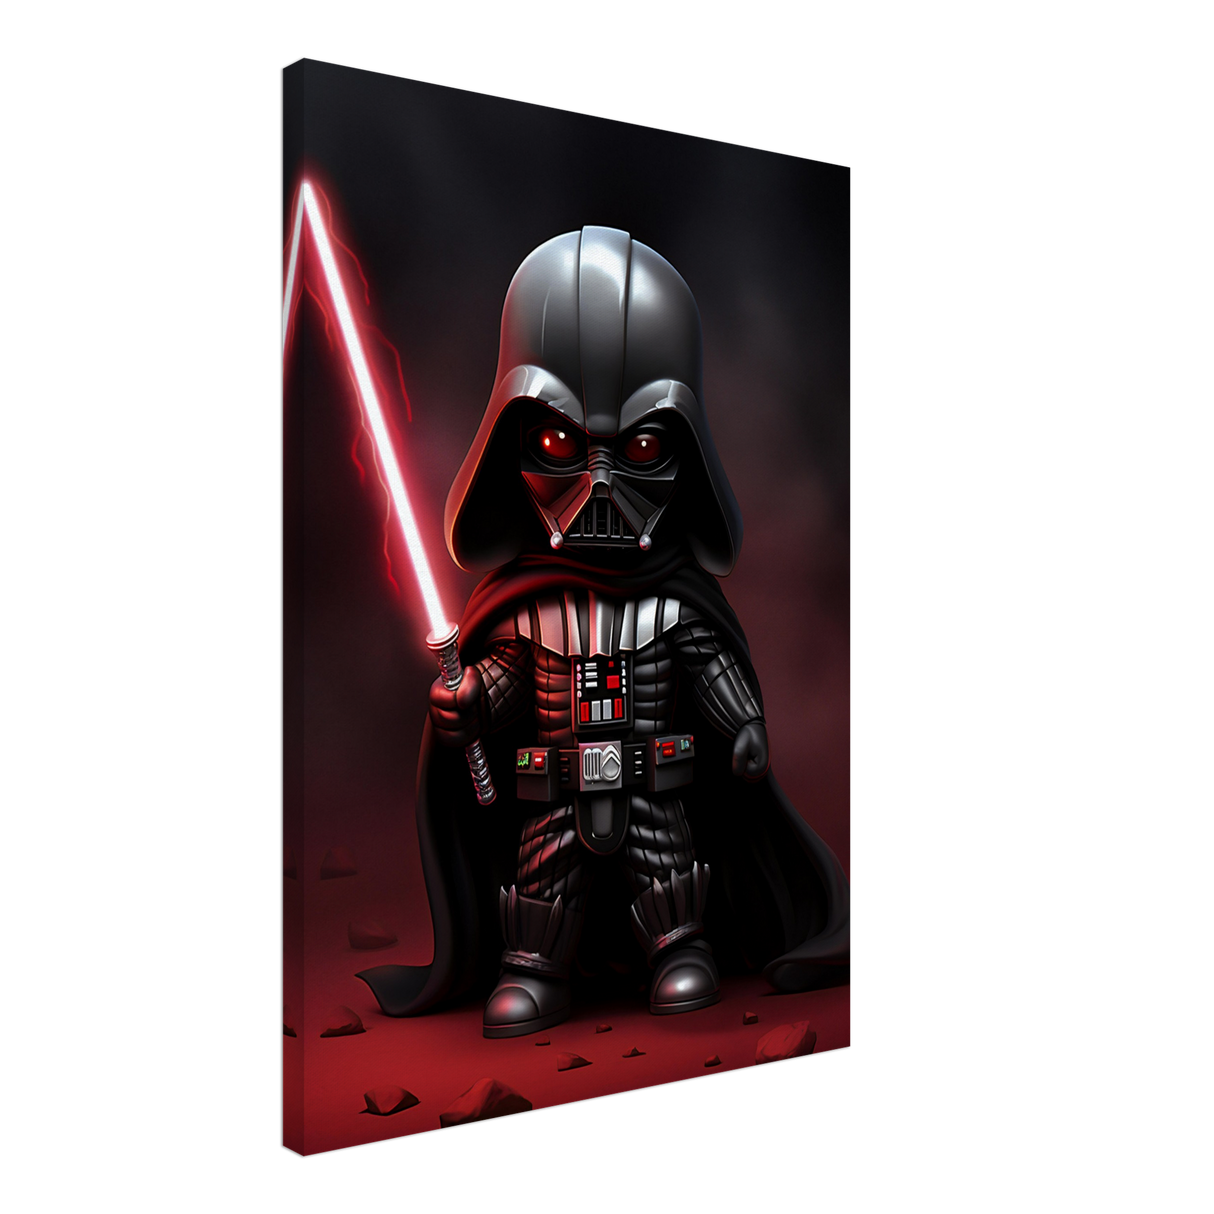 Chibi Darth Vader